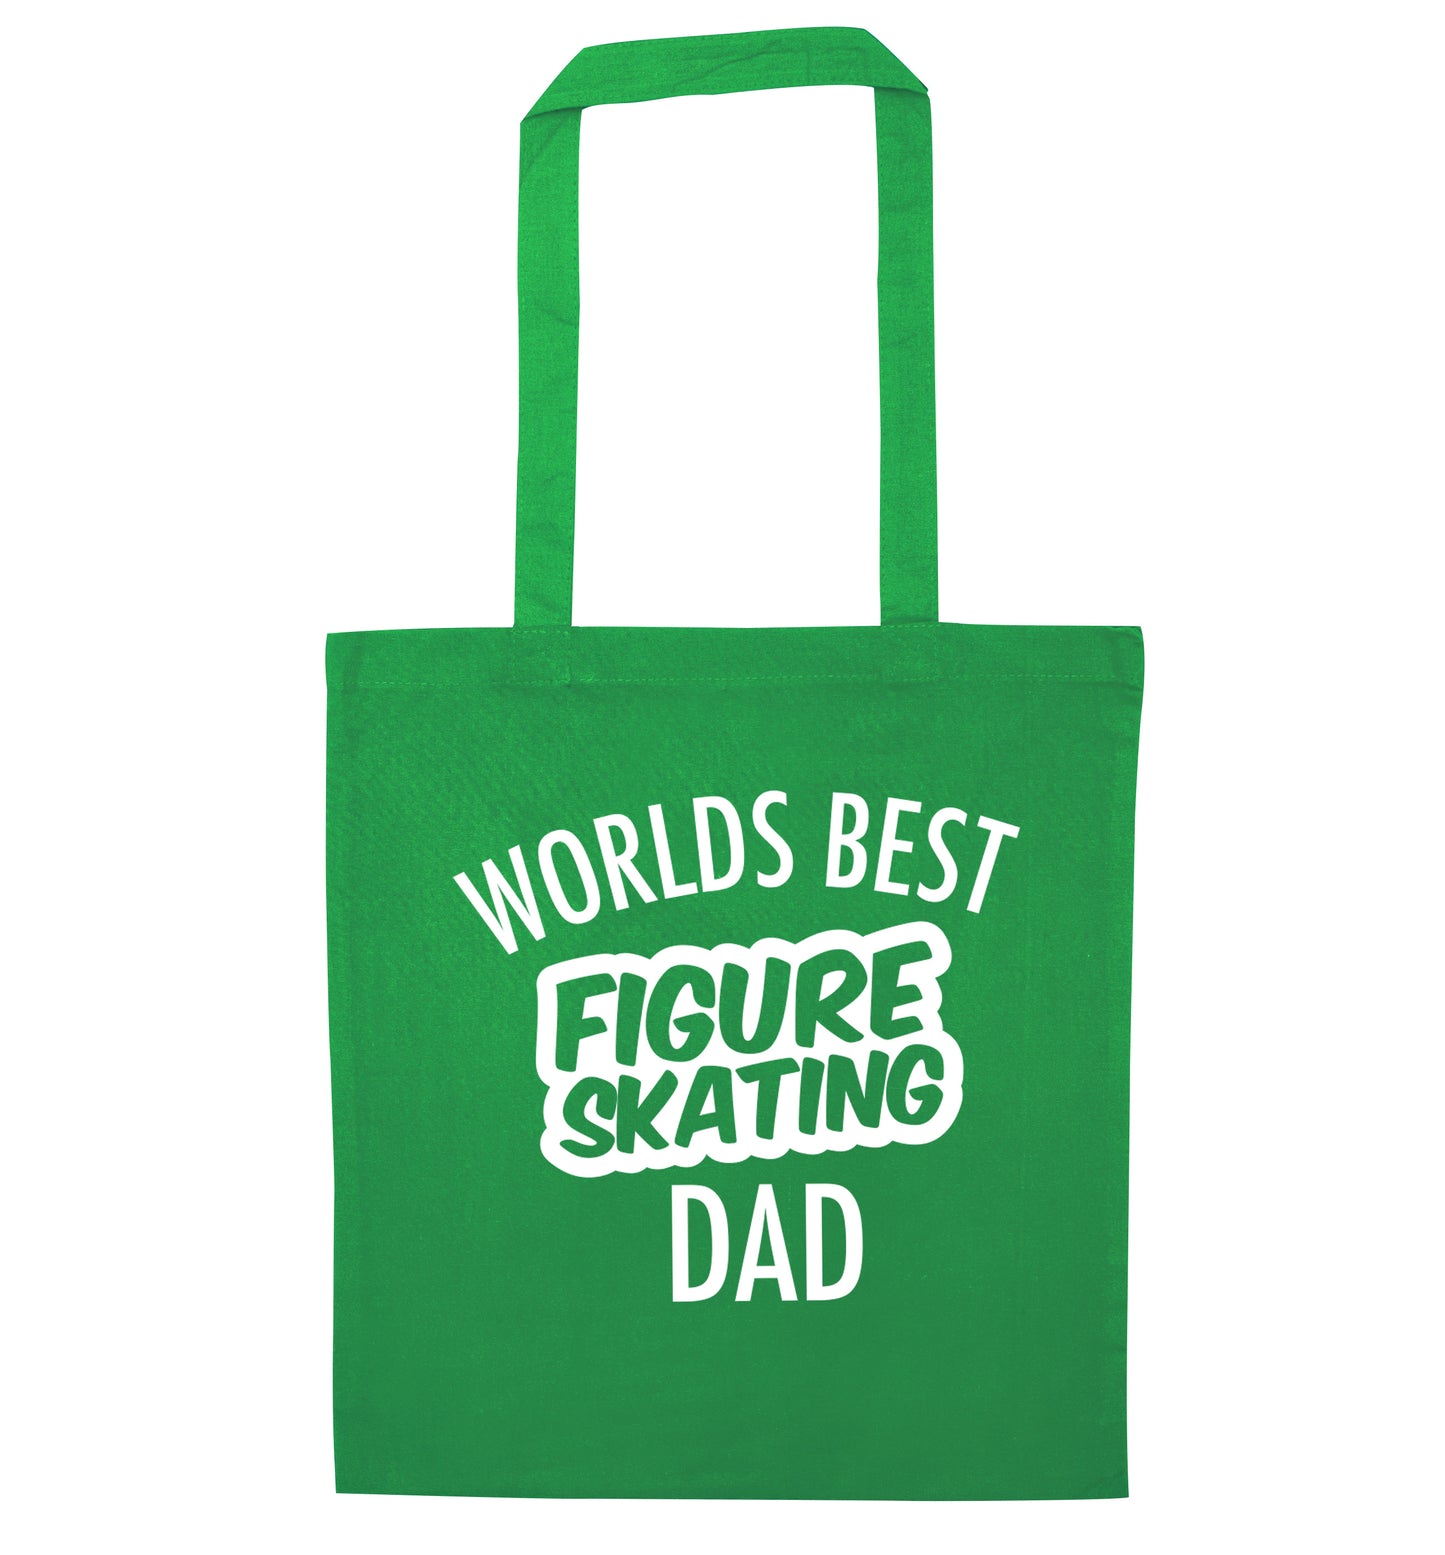 Worlds best figure skating dad green tote bag